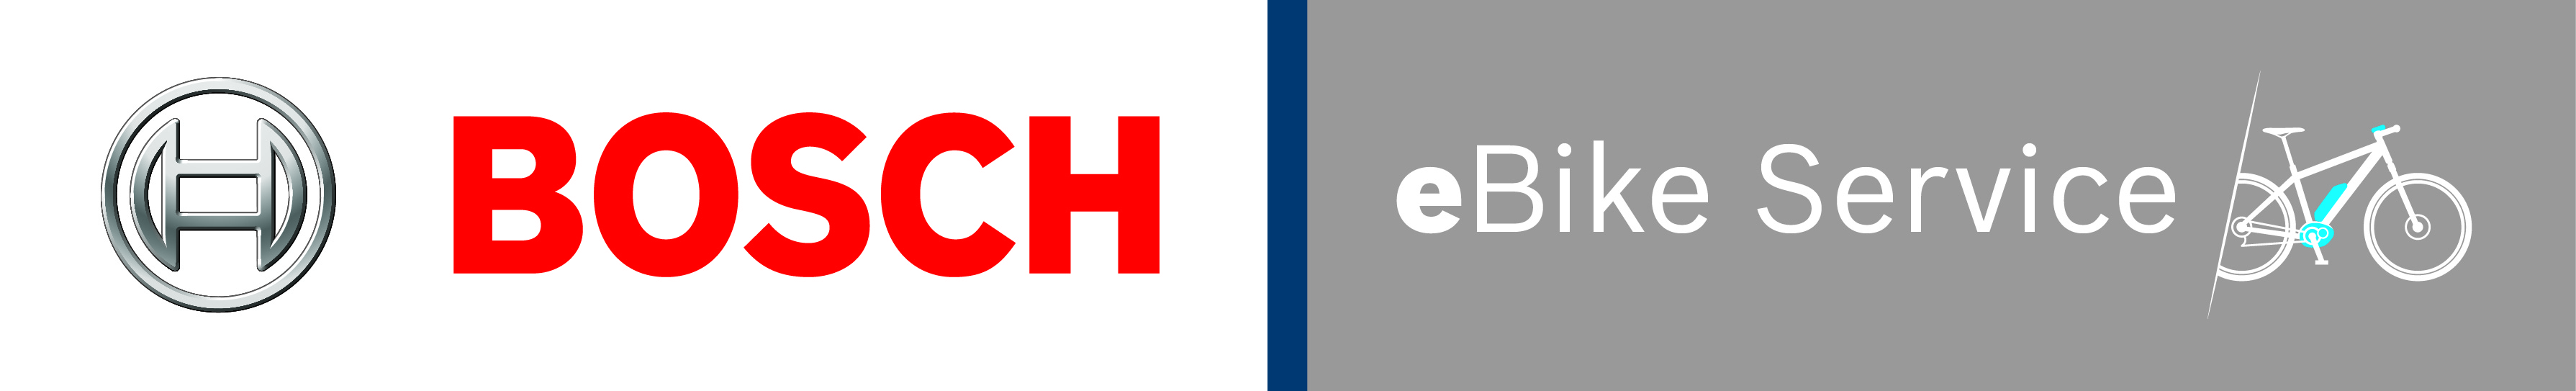 bosch-ebike-service-logo-banner